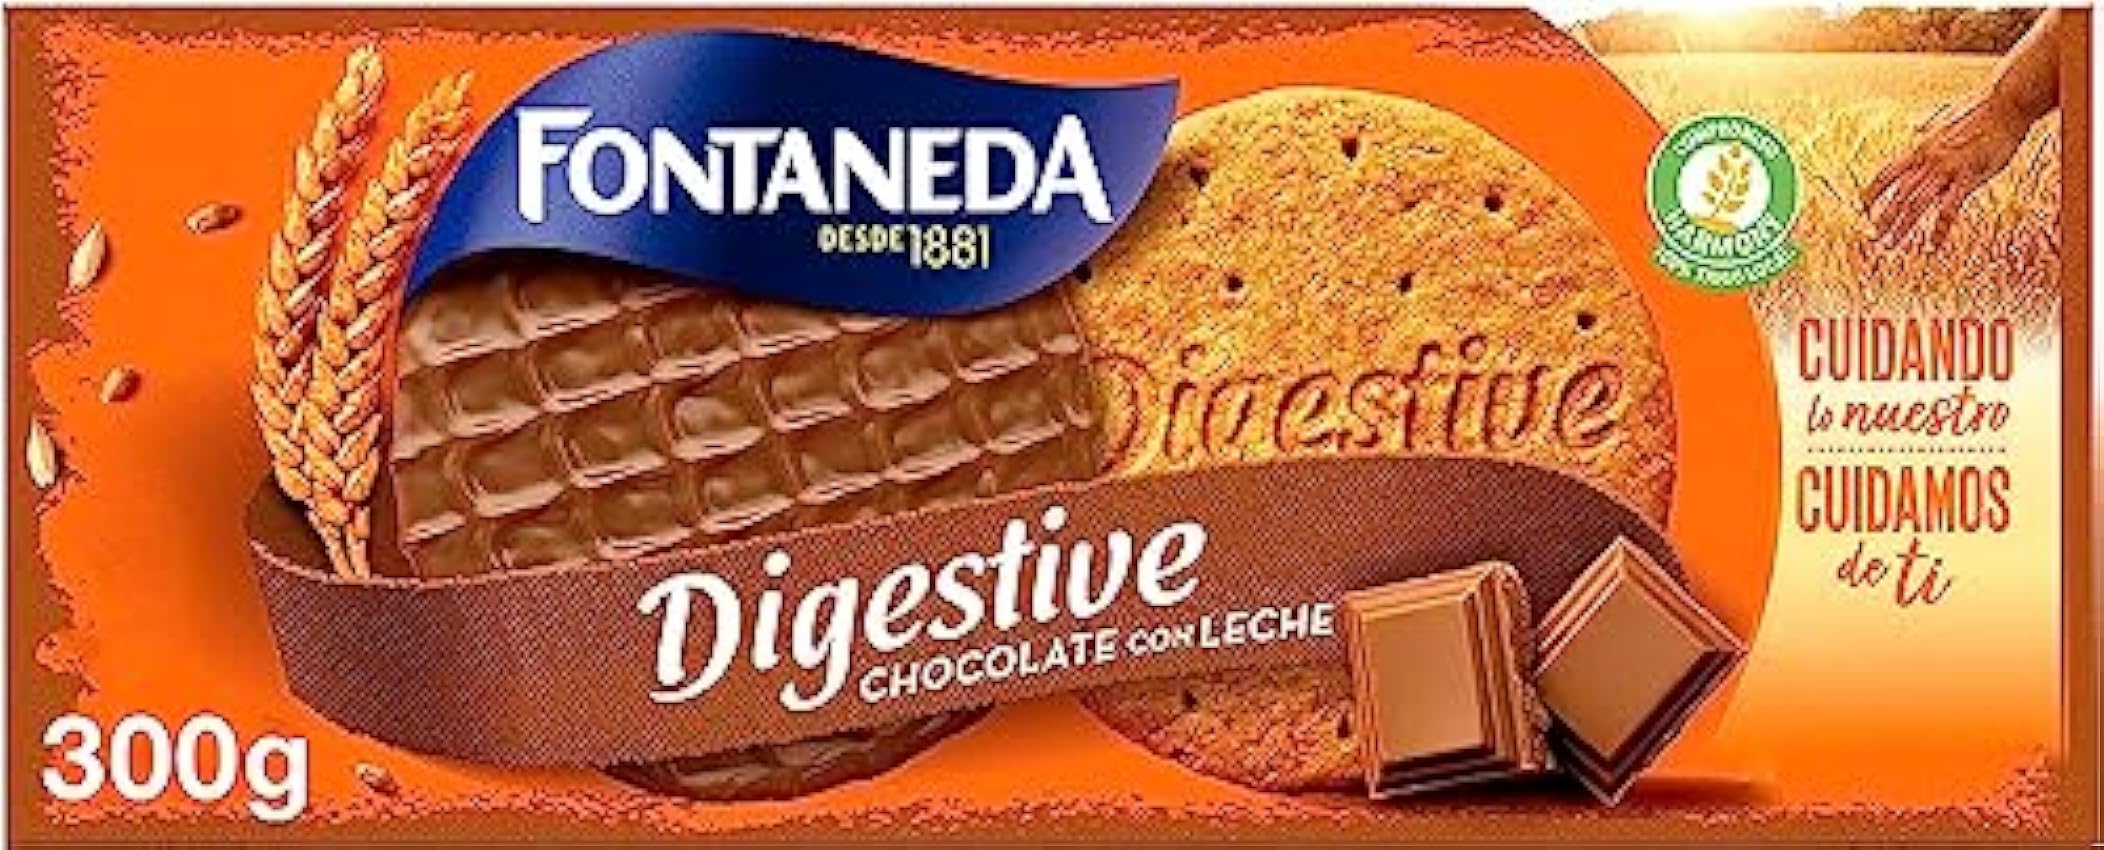 Fontaneda Digestive Galletas con Chocolate con Leche 30